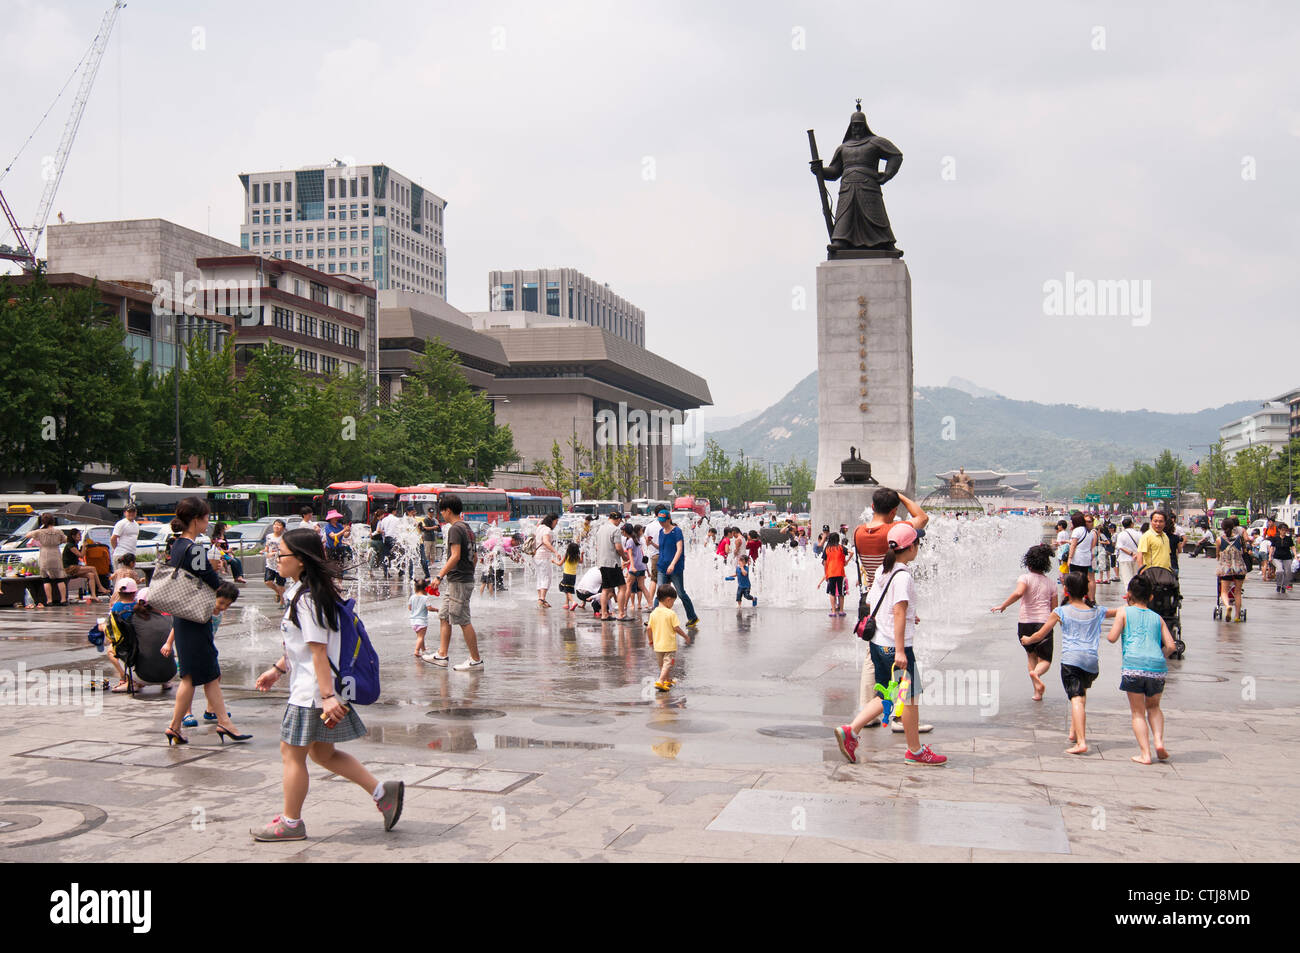 People enjoying hot summer day in Gwanghwamun Square, Seoul, Korea Stock Photo